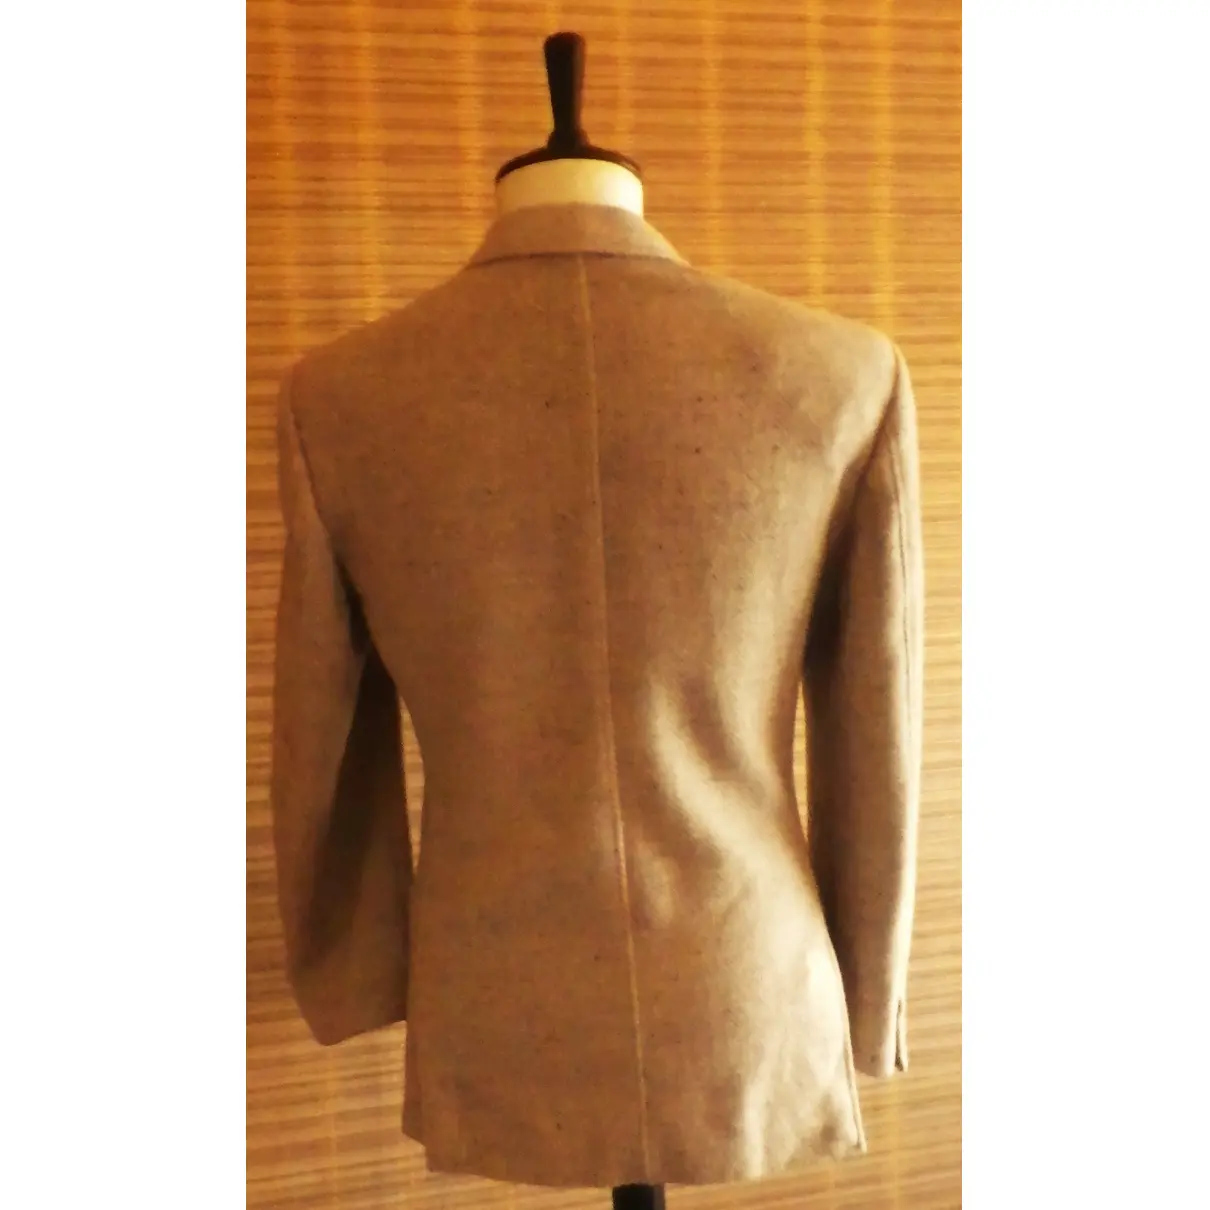 Buy Saint Laurent Wool vest online - Vintage